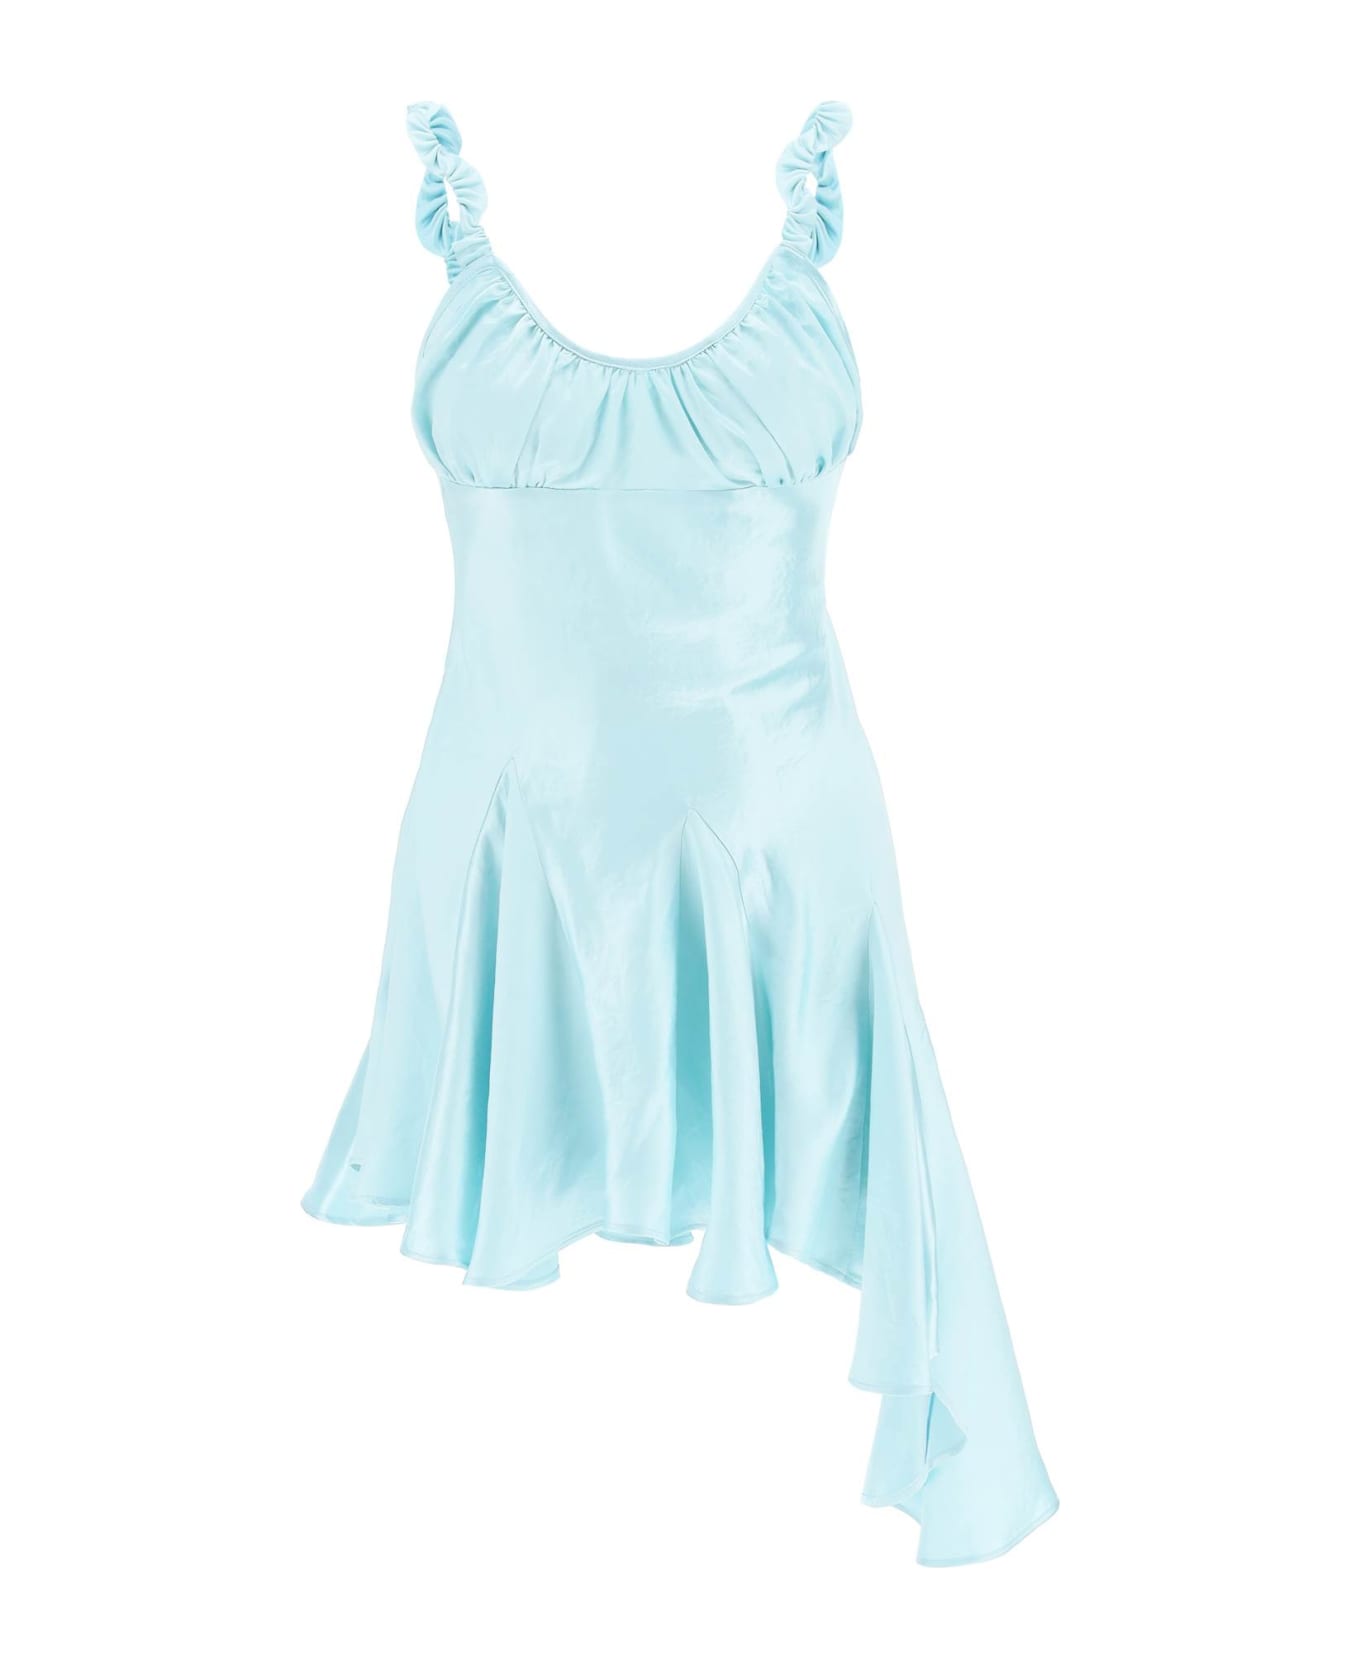 Collina Strada 'ivy' Asymmetric Satin Dress - CELADON (Light blue)